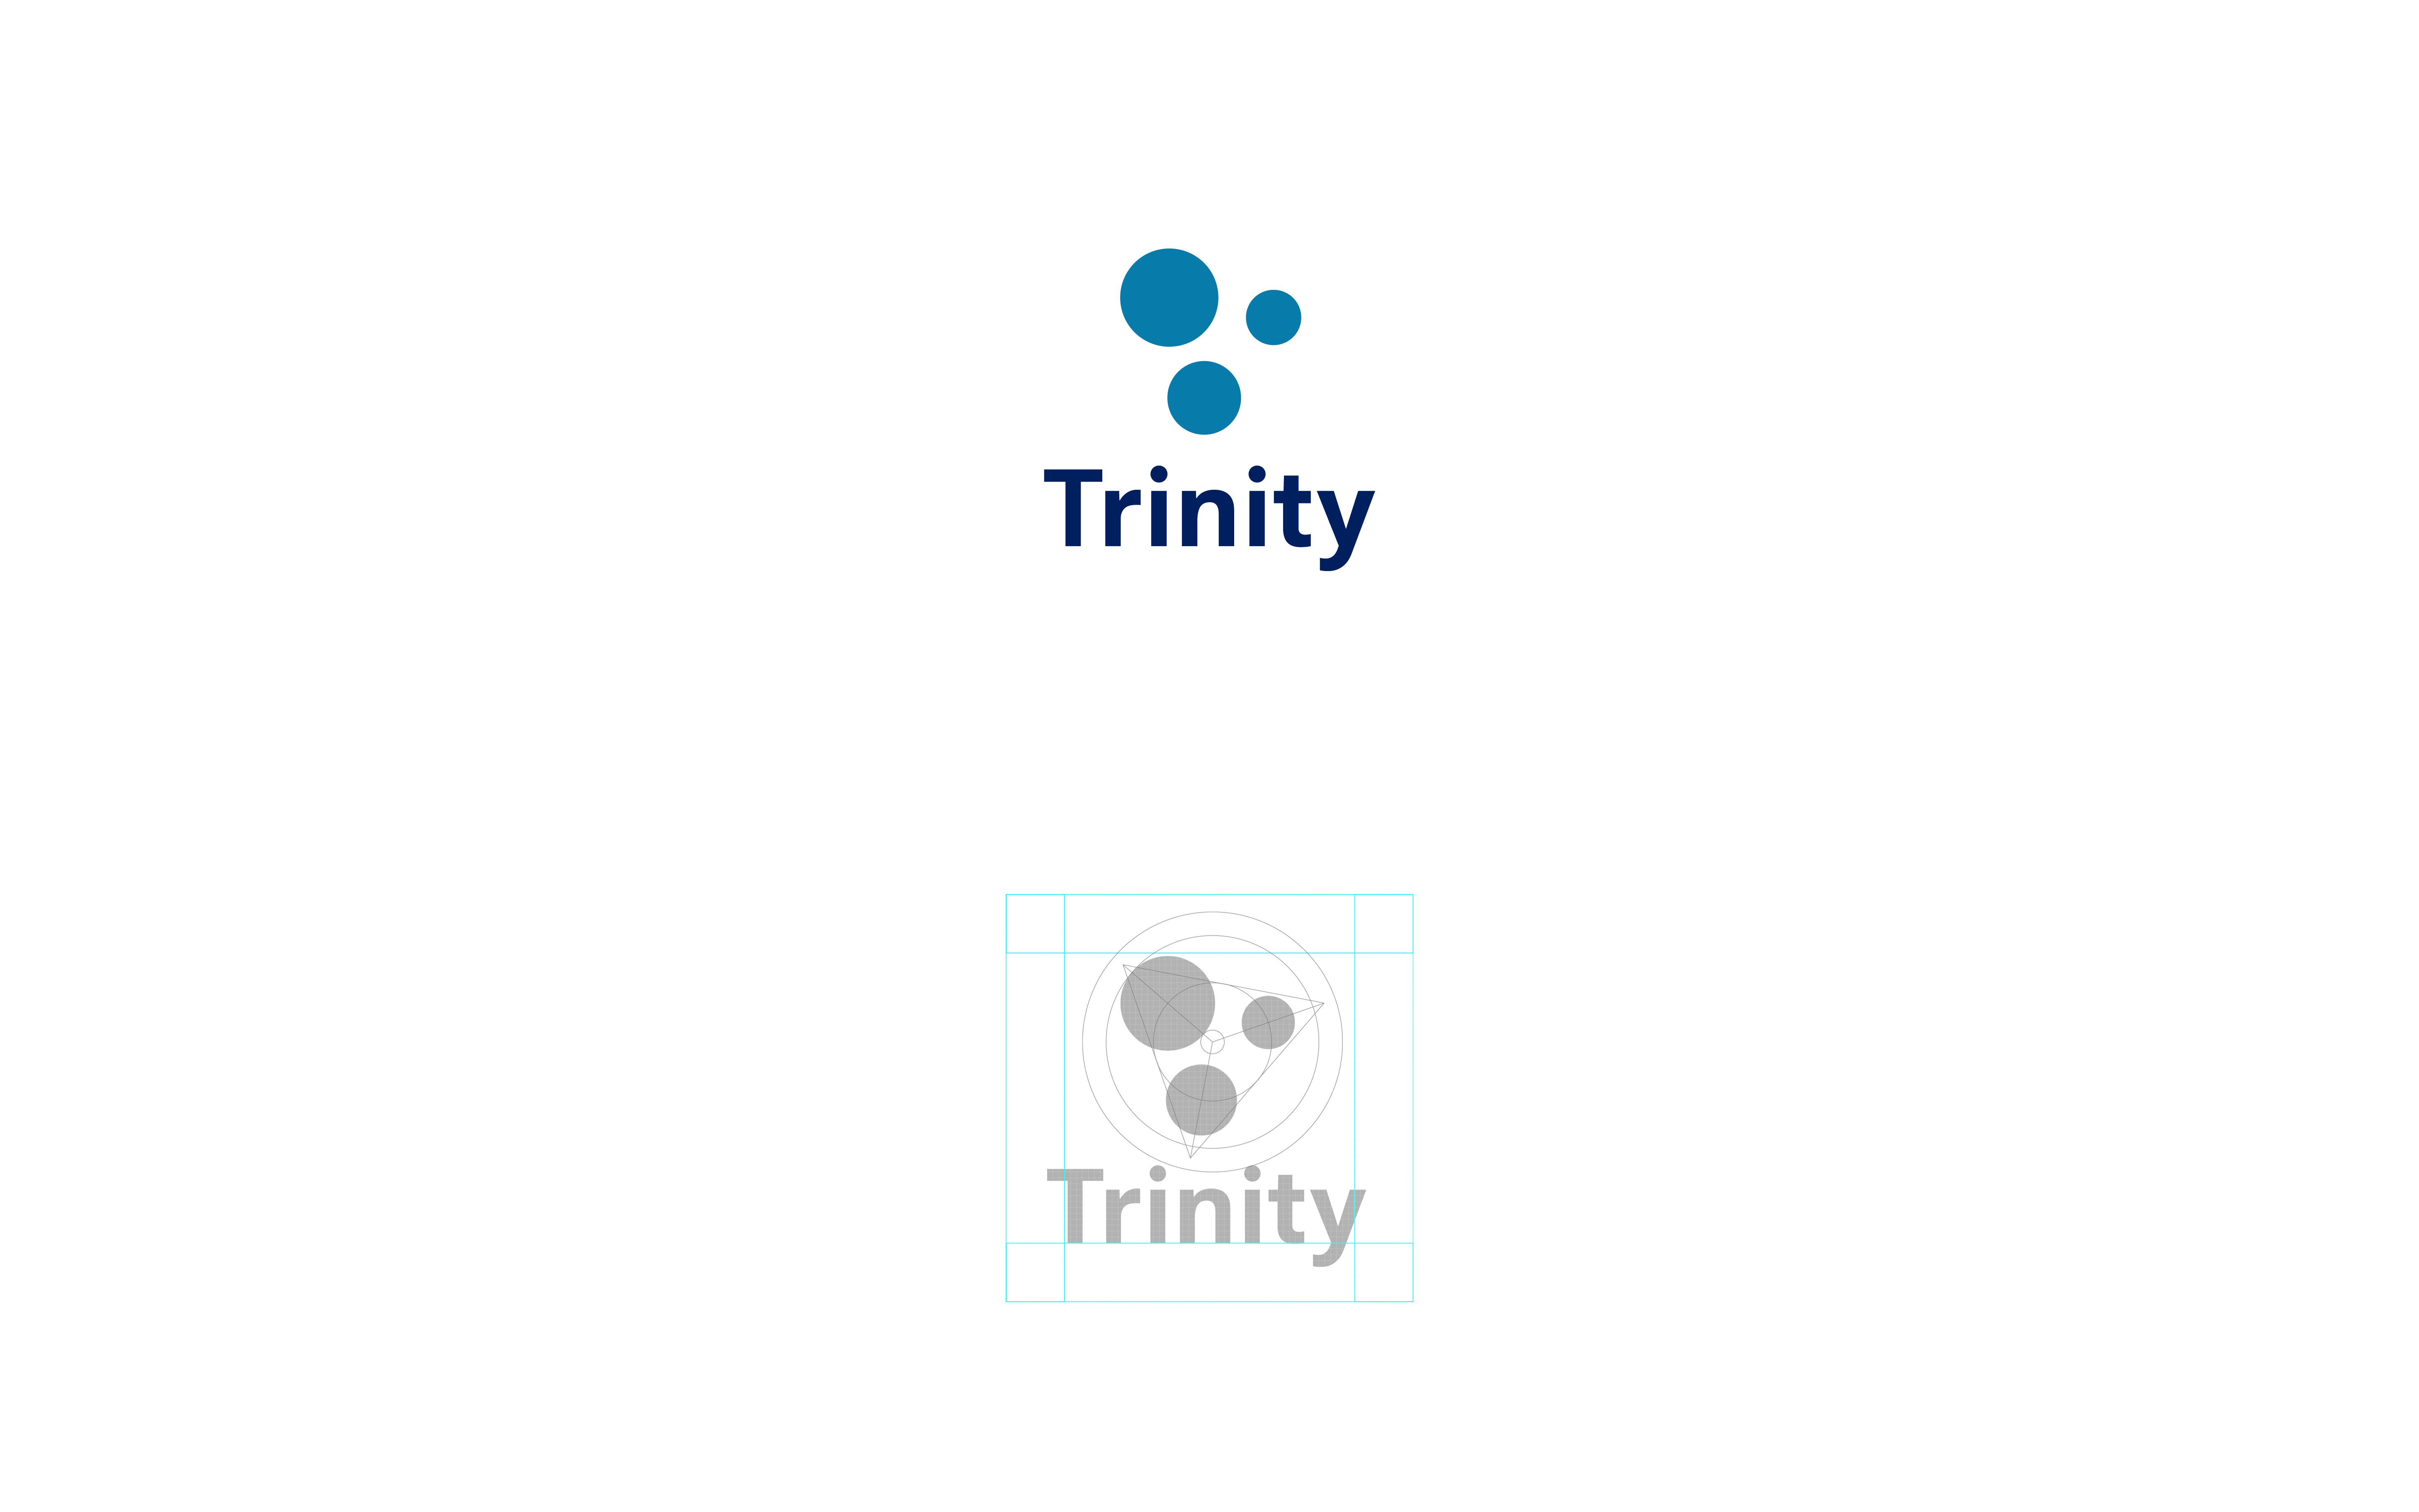 Old and new Trinity logos